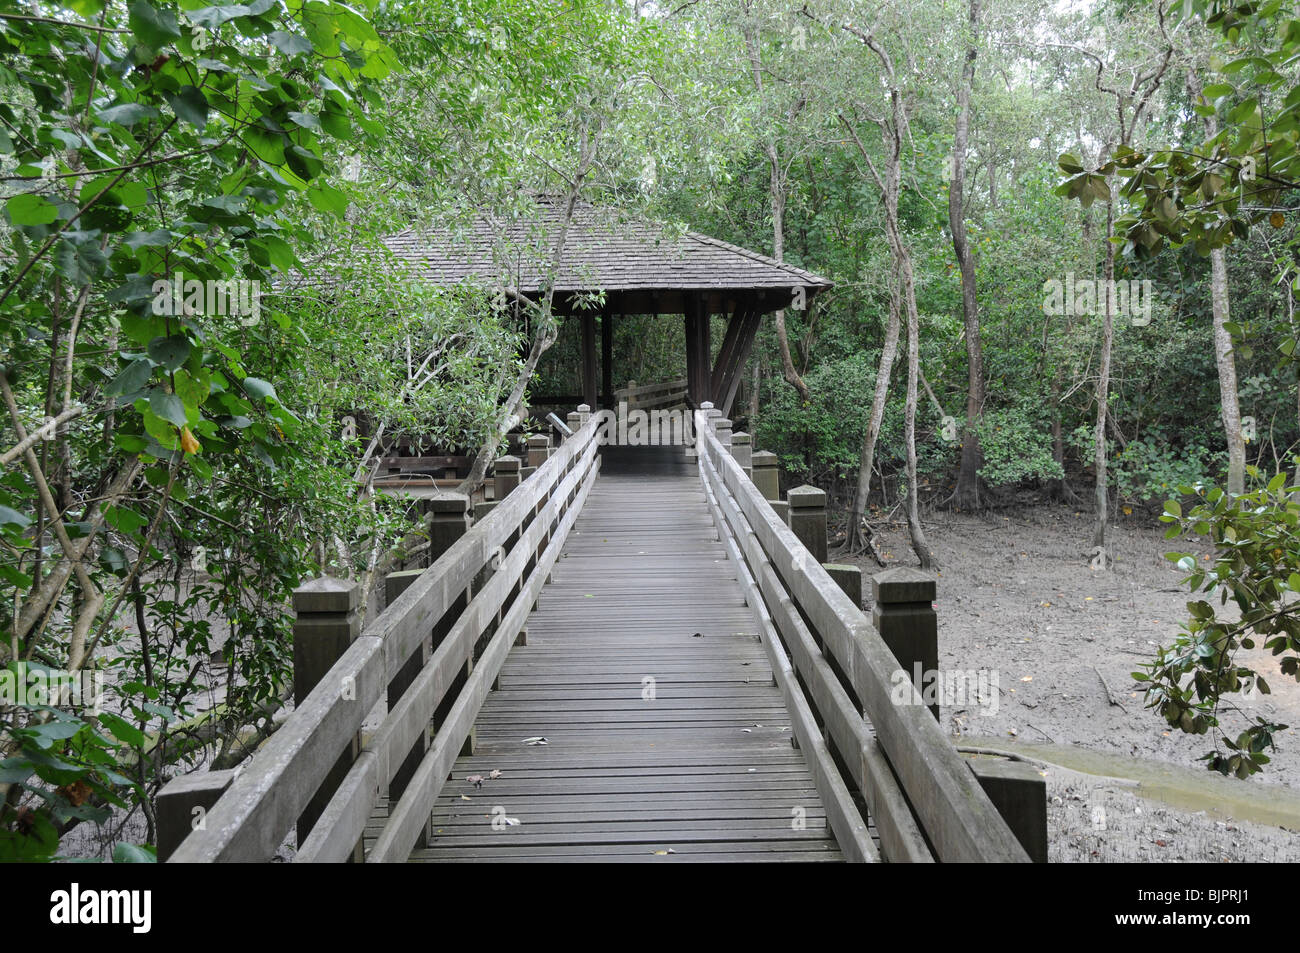 Part of the 500metre broadwalk through the mangrove at the Sungei Buloh Wetland Reserve, Singapore. Stock Photo